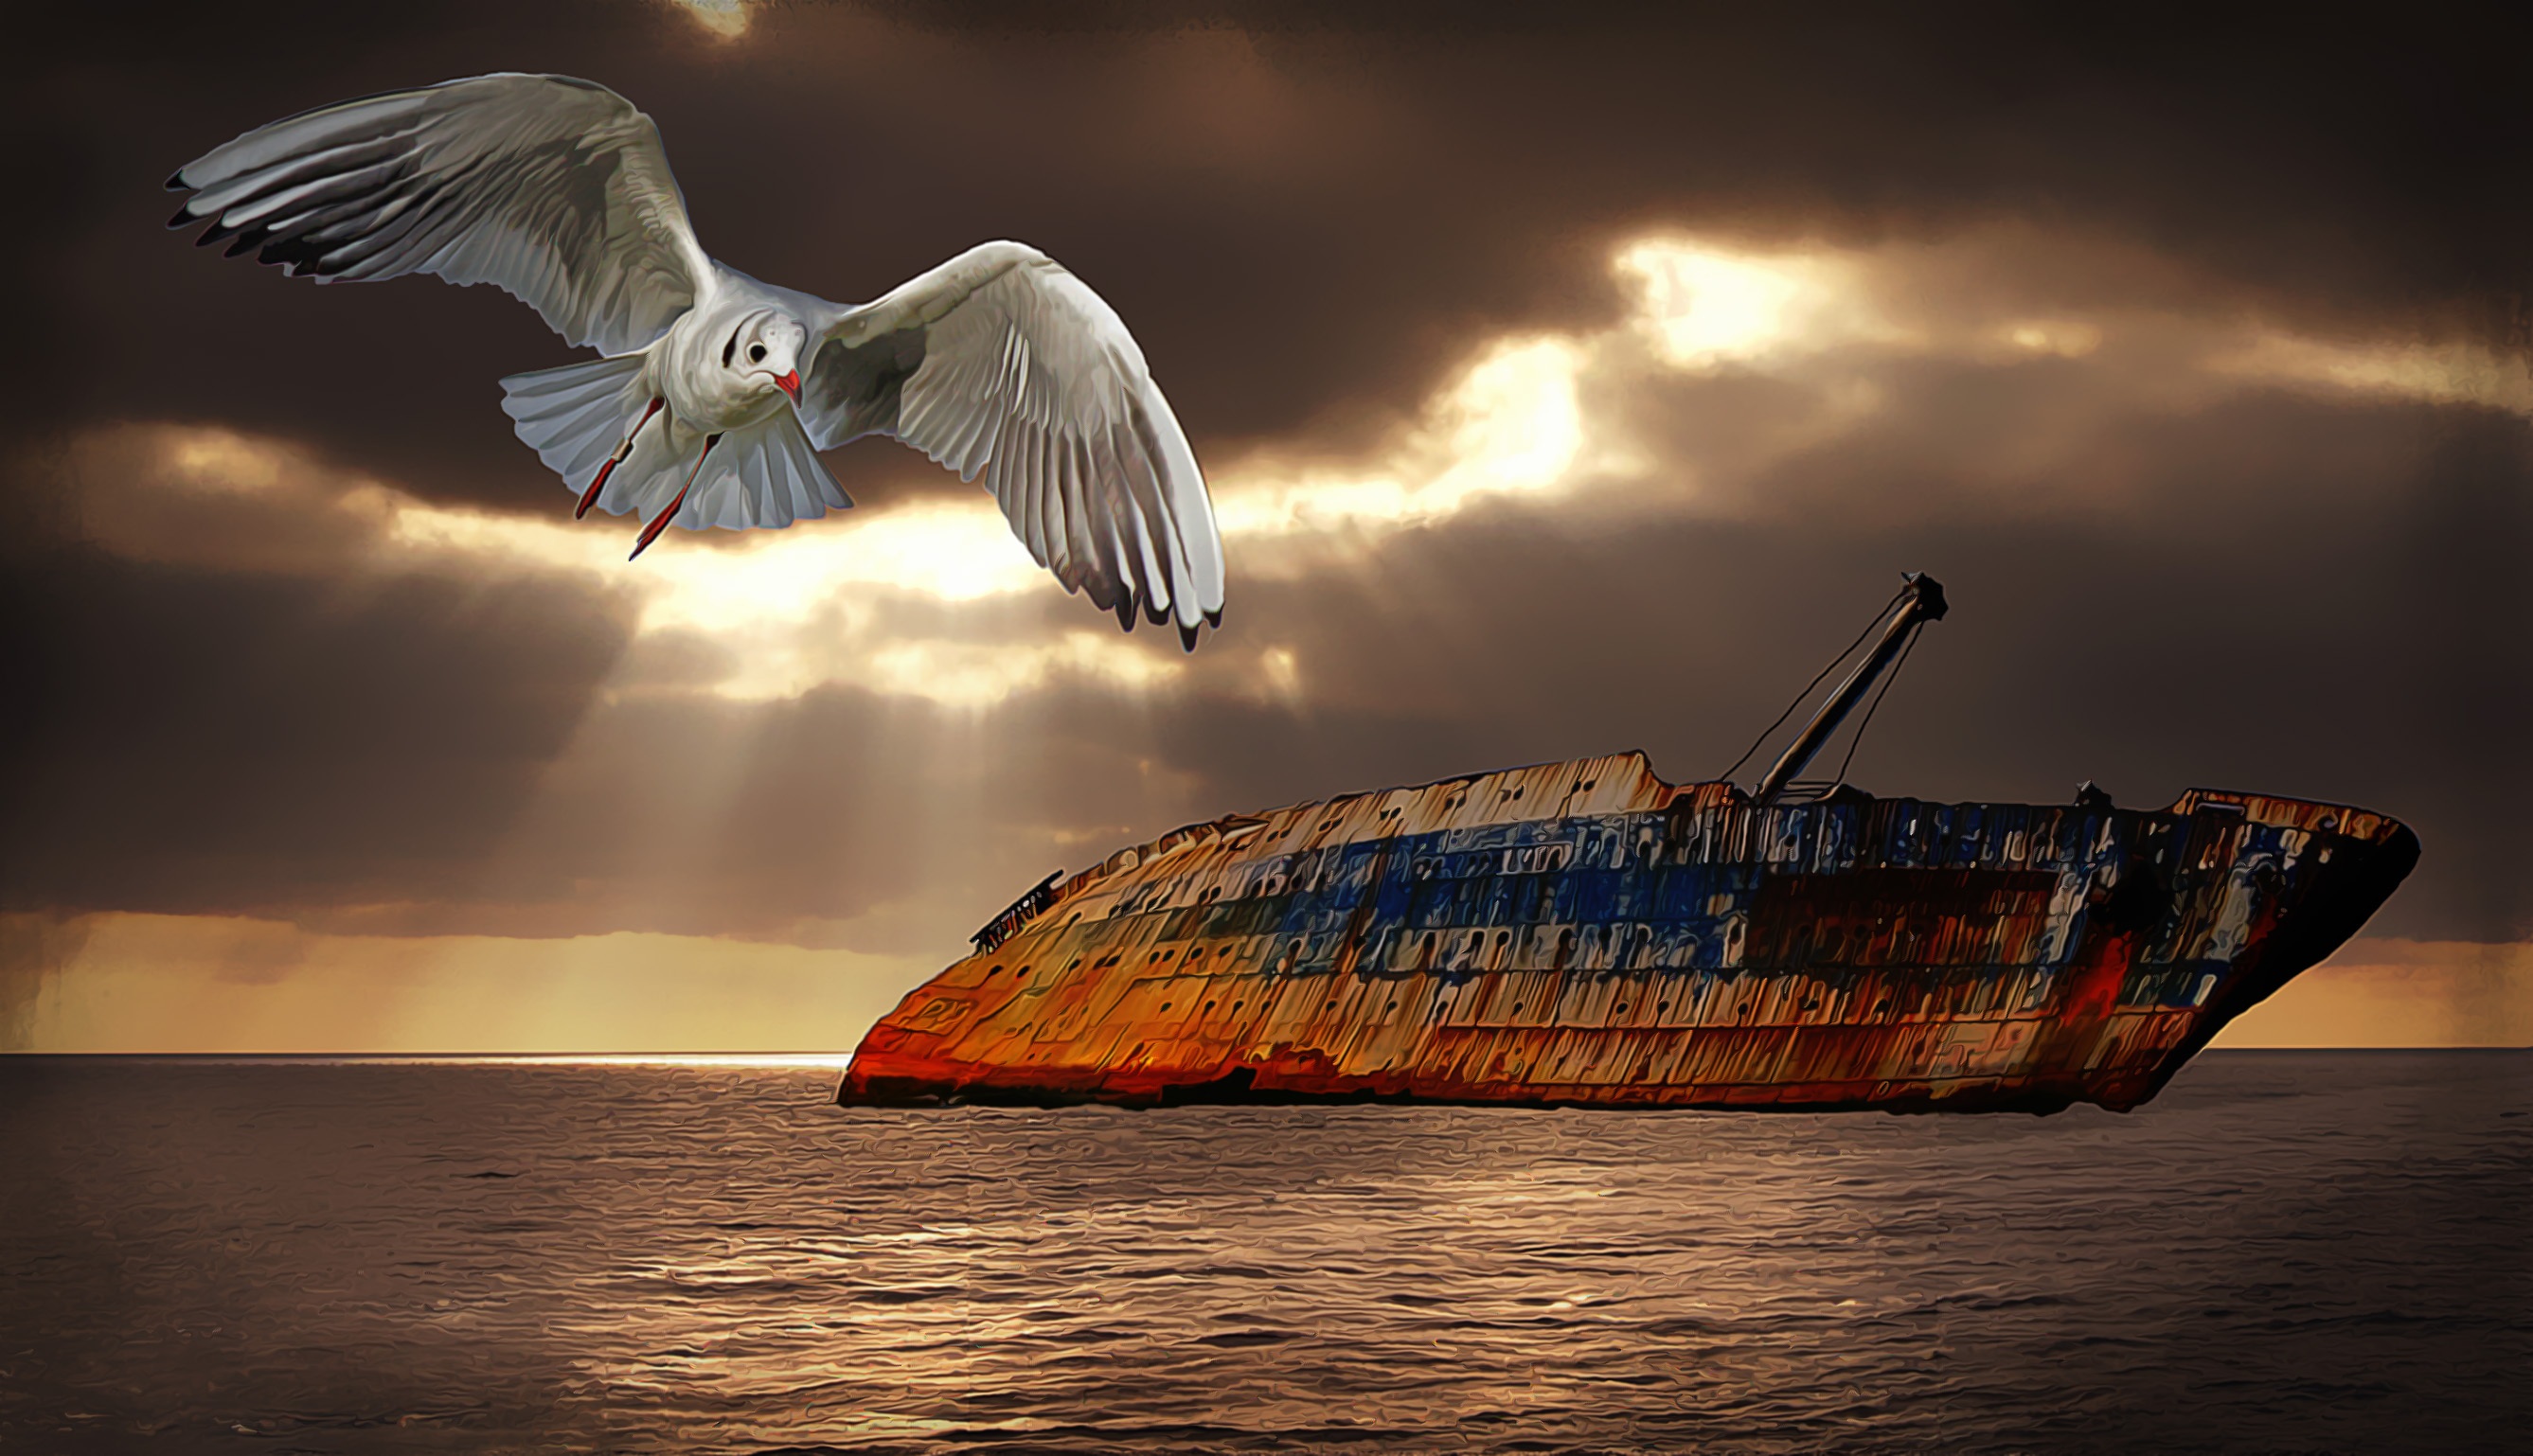 Bird and old ship wreck photo